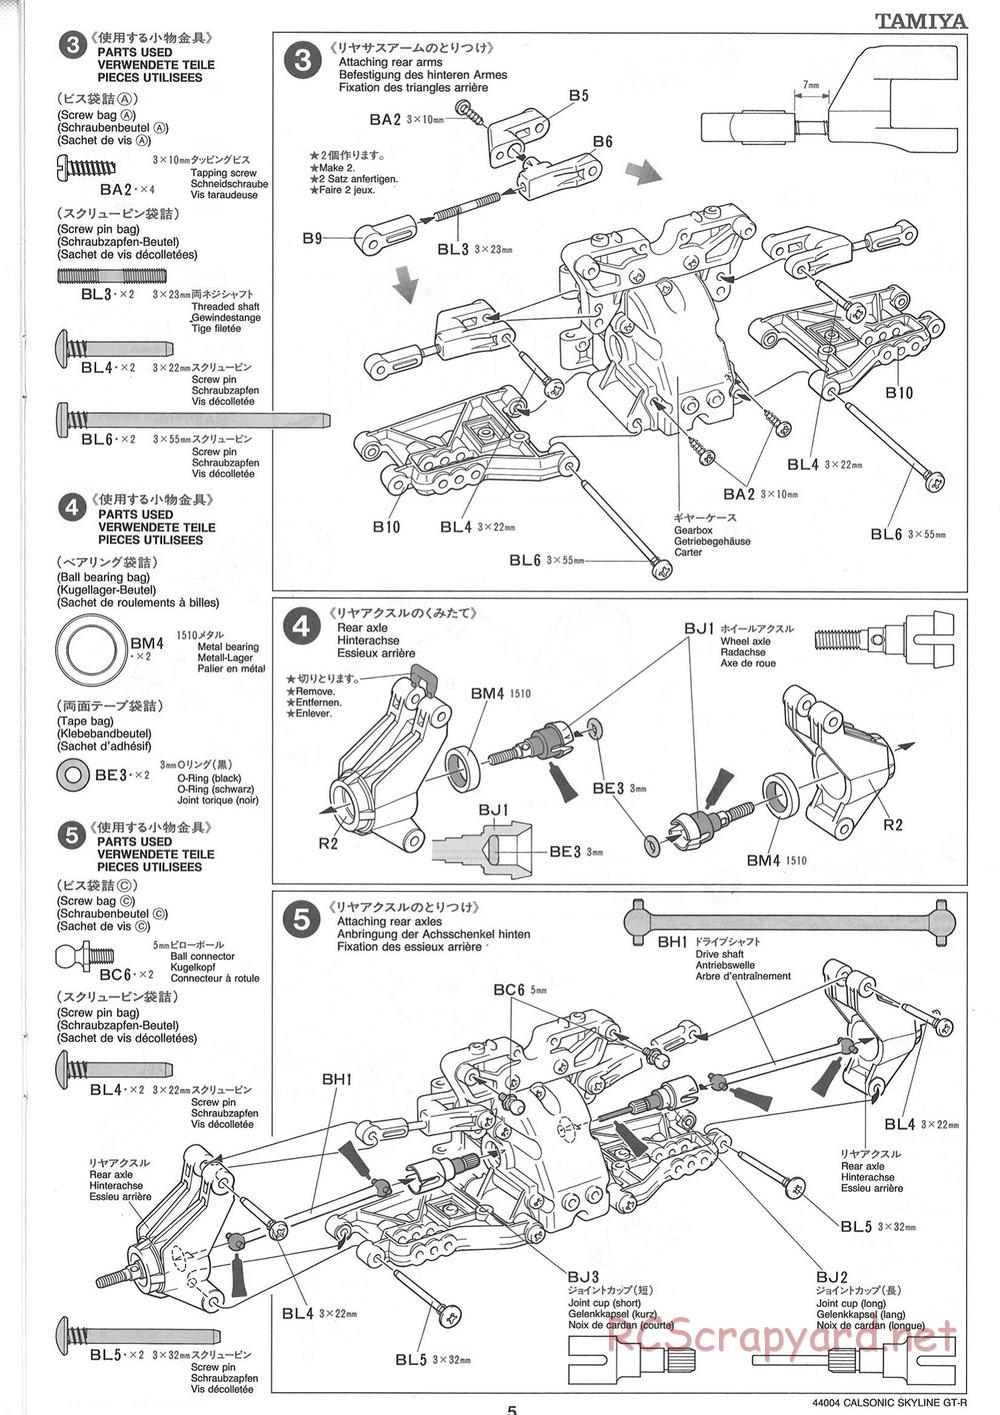 Tamiya - Calsonic GT-R - TGX Mk.1 Chassis - Manual - Page 5